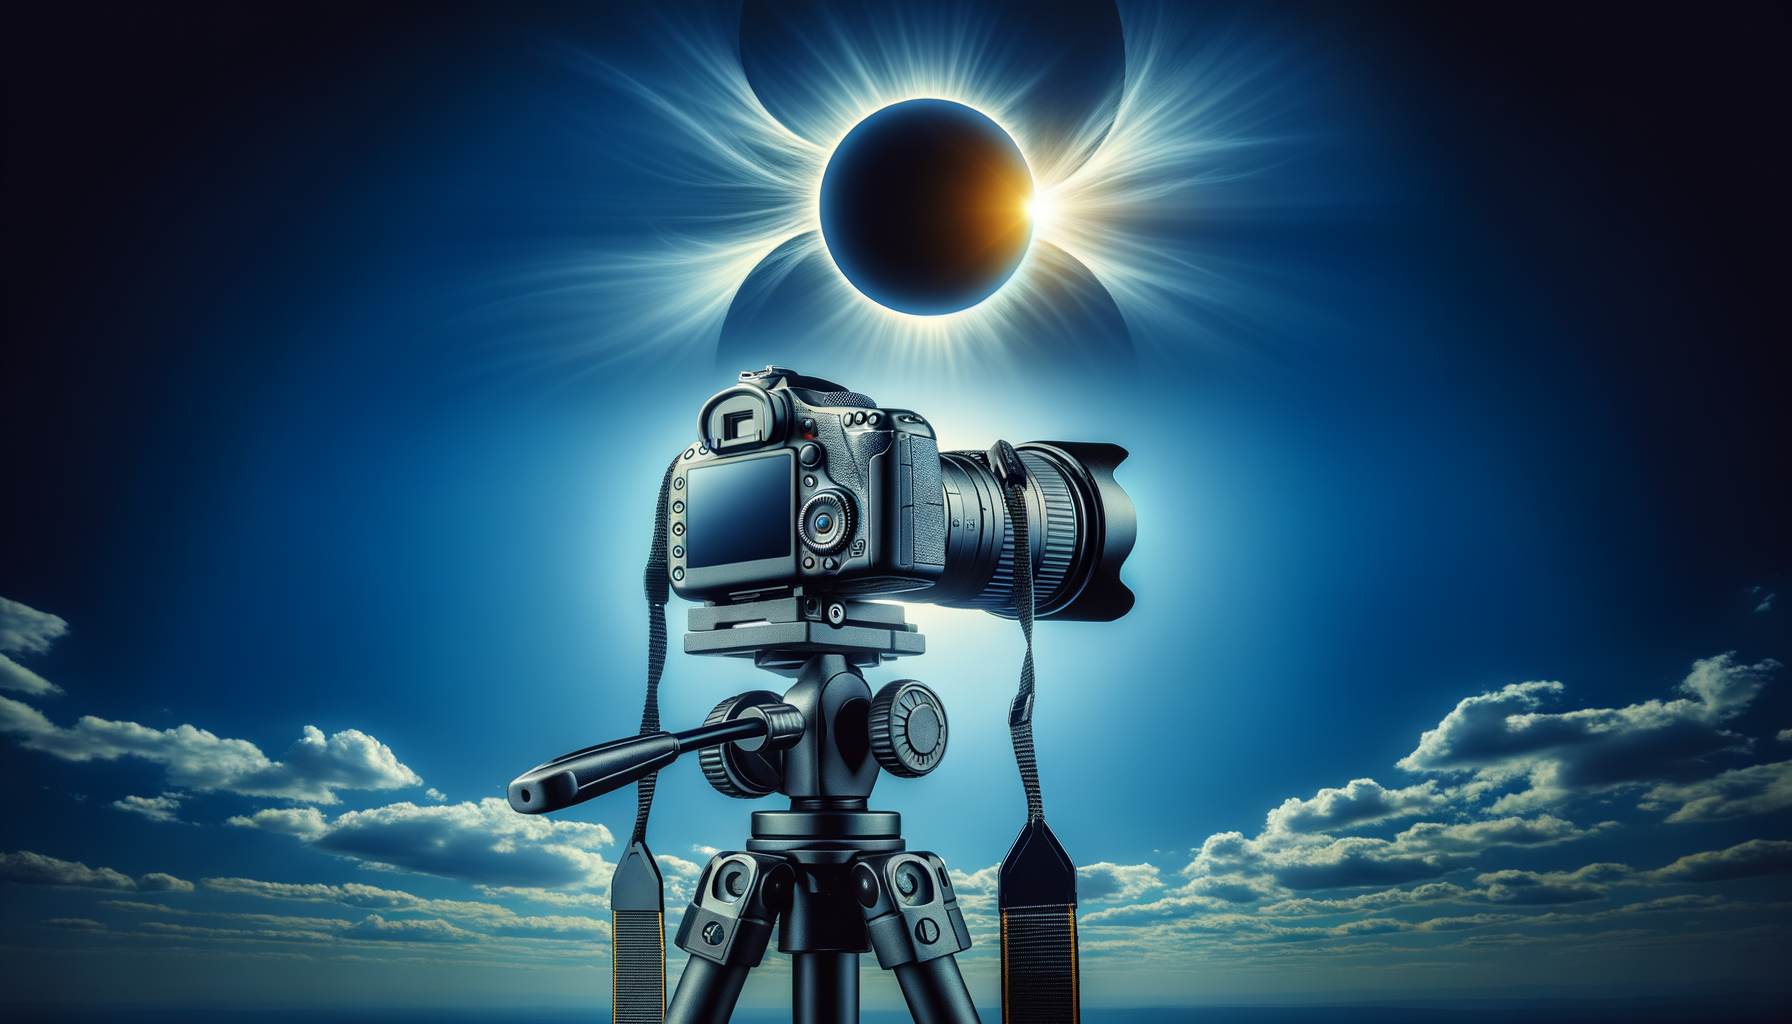 ALT: Camera equipment prepared for solar eclipse photography